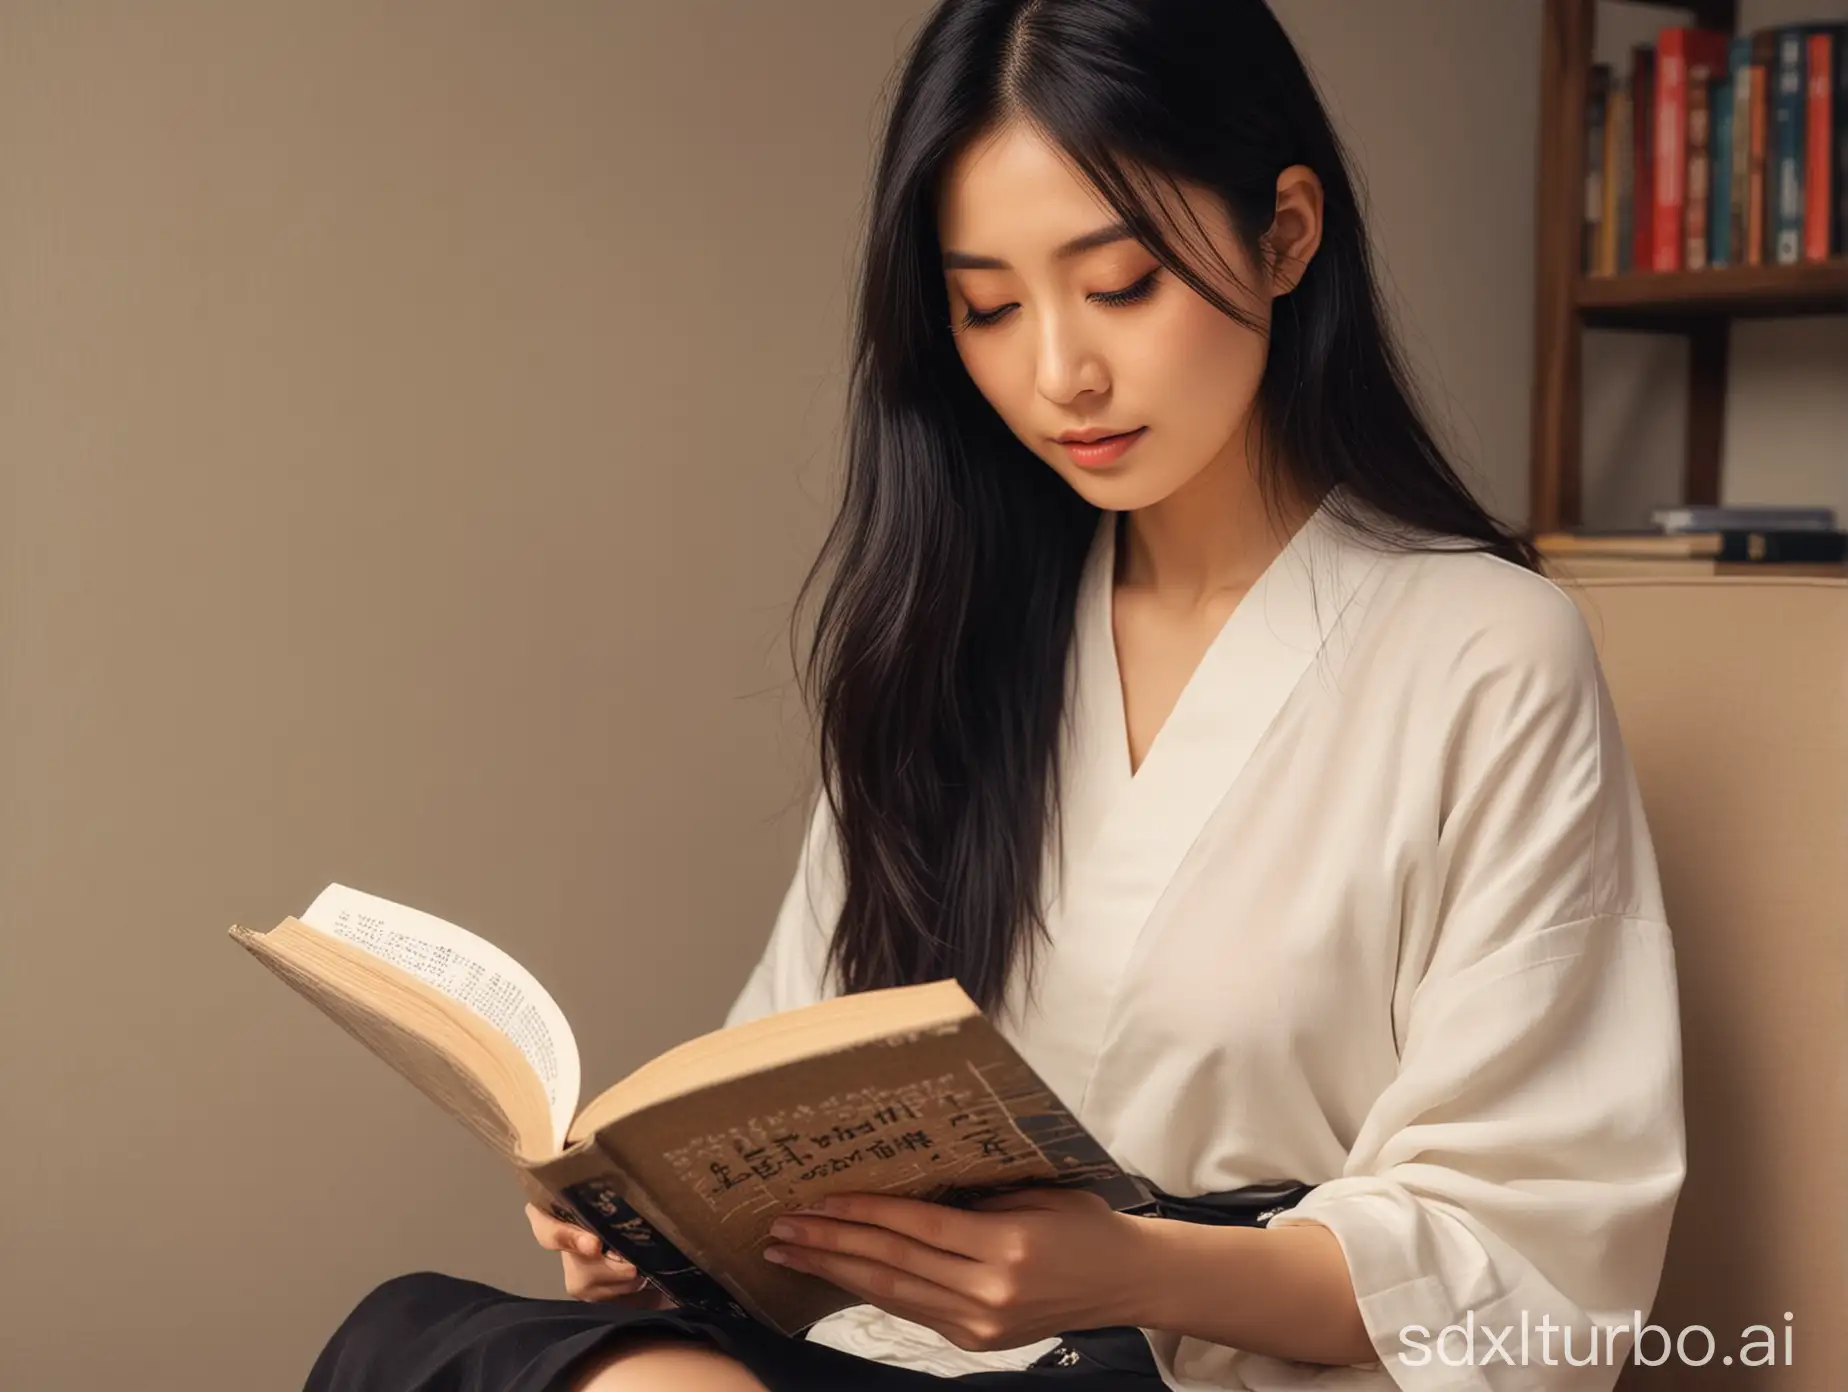 Japanese-Woman-Engrossed-in-Book-Intellectual-Instagram-Model-with-Long-Black-Hair